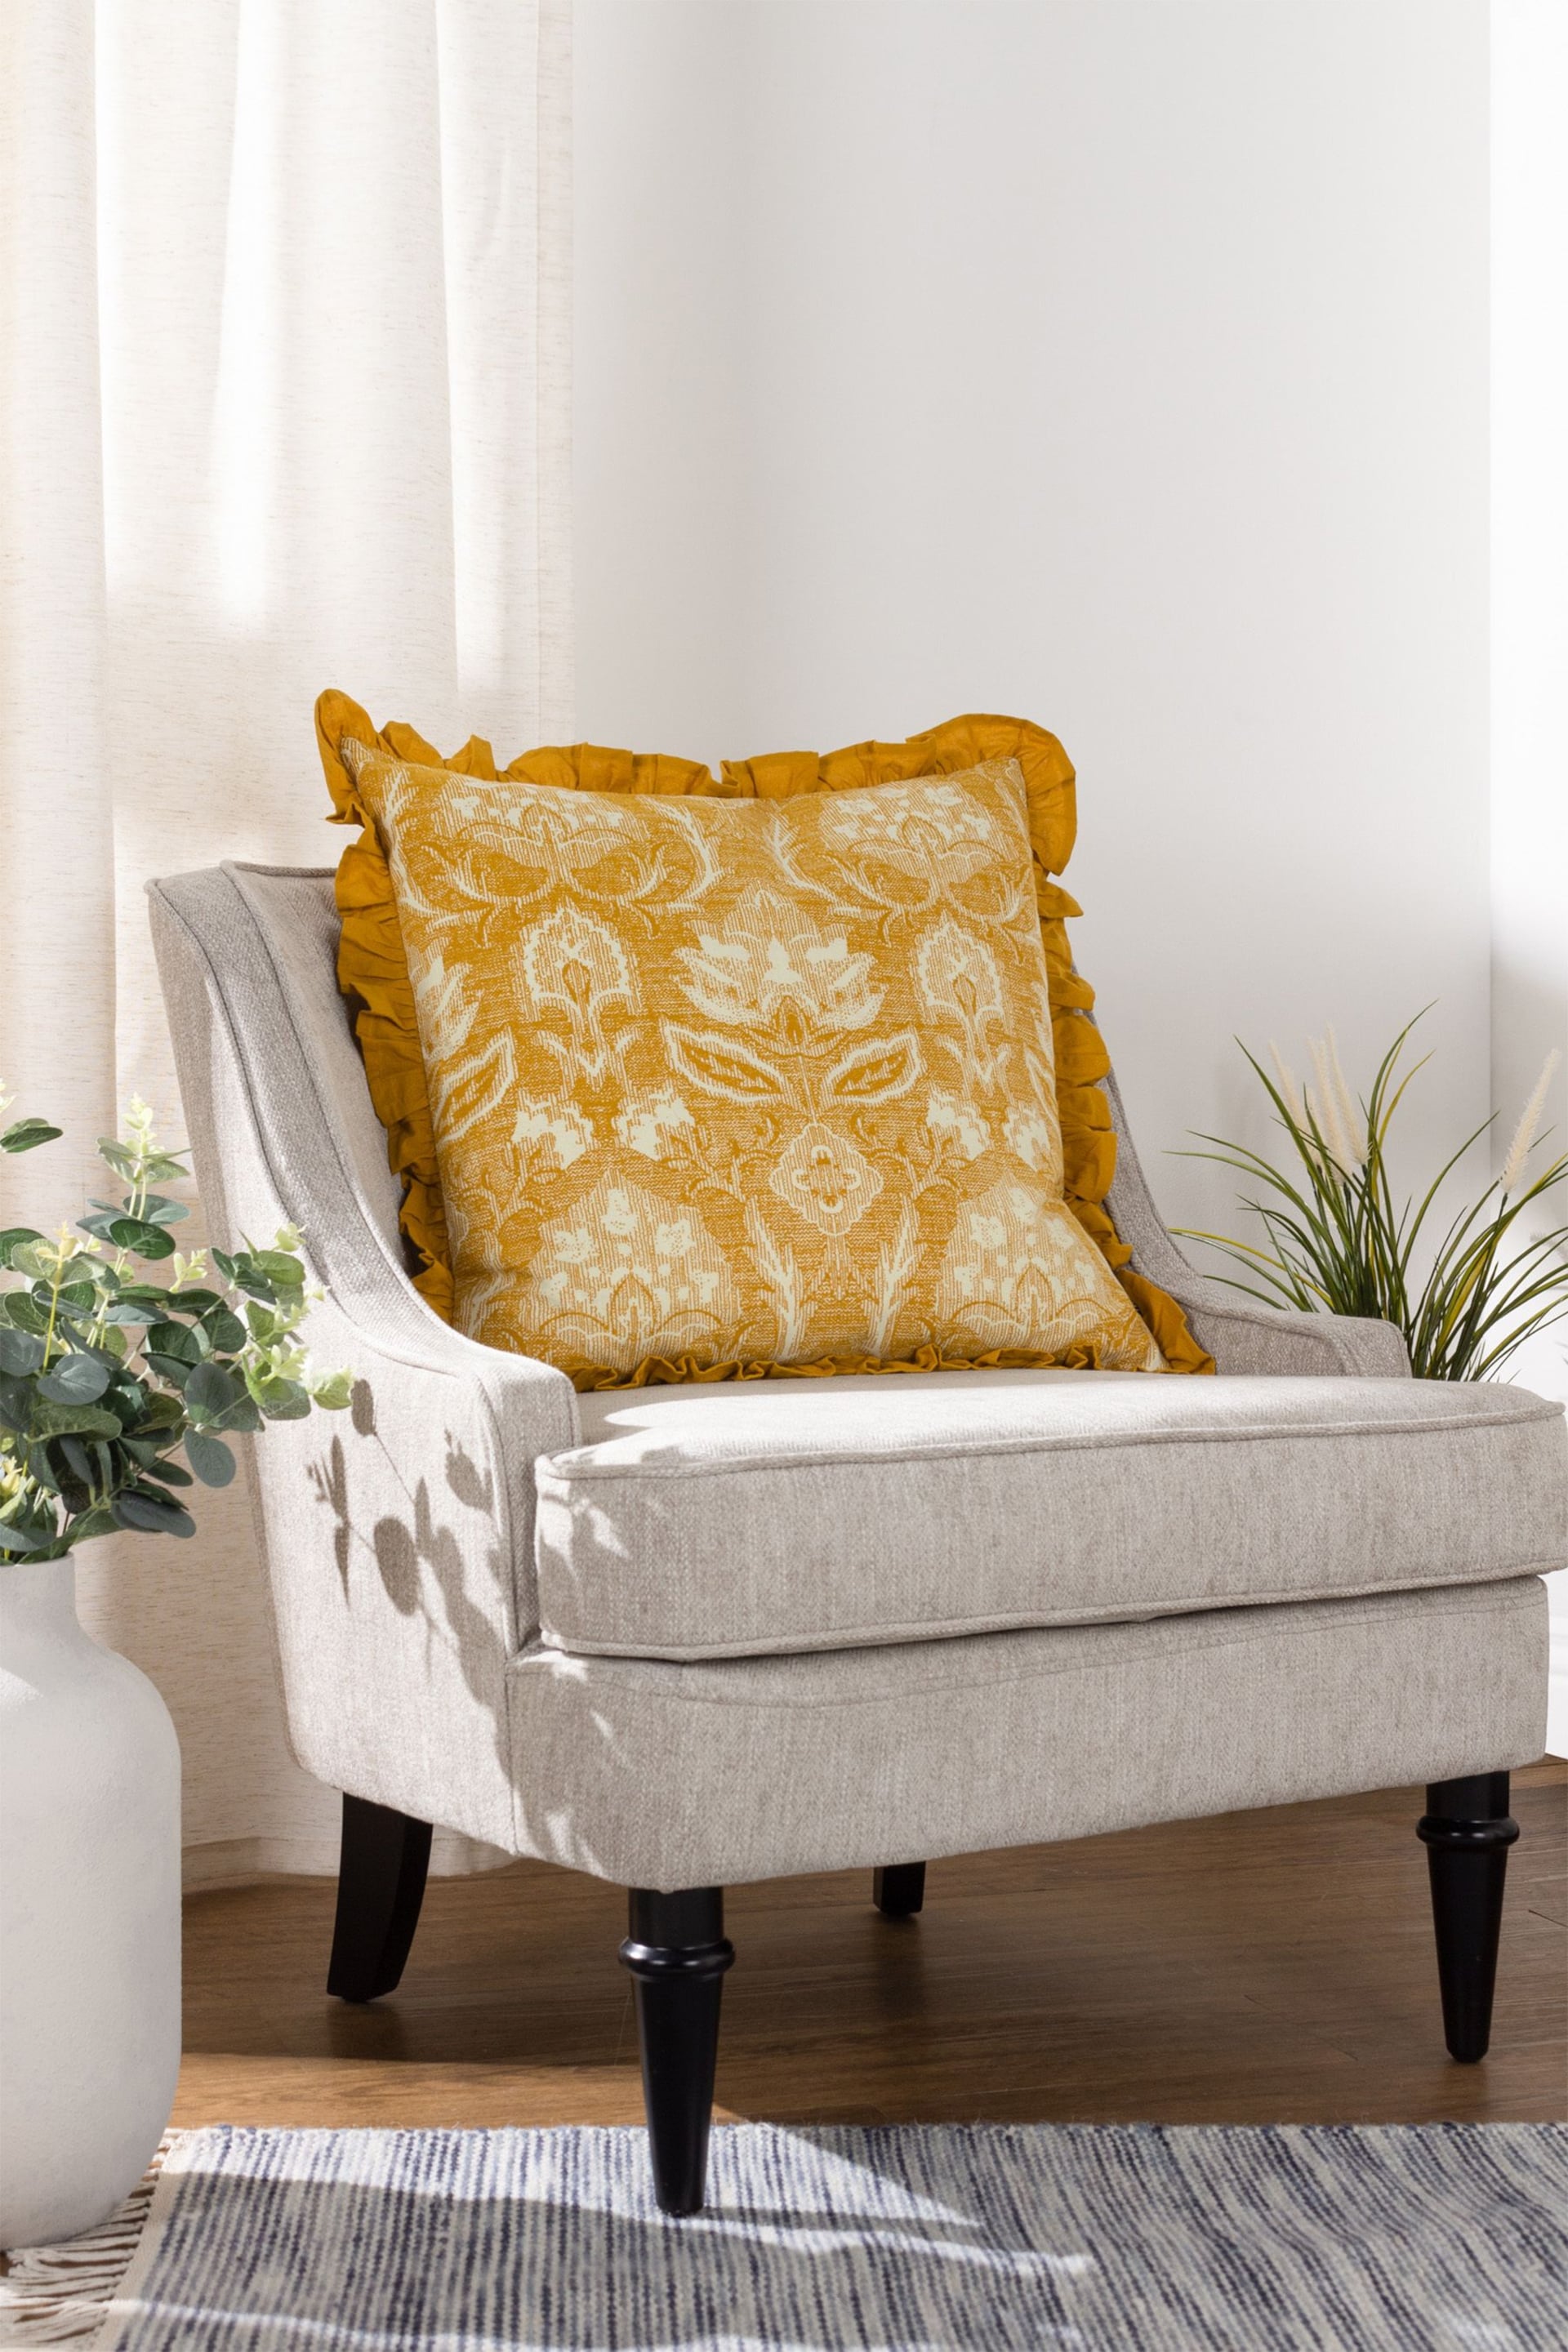 Riva Paoletti Ochre Yellow Kirkton Floral Tile Cotton Pleated Cushion - Image 1 of 7